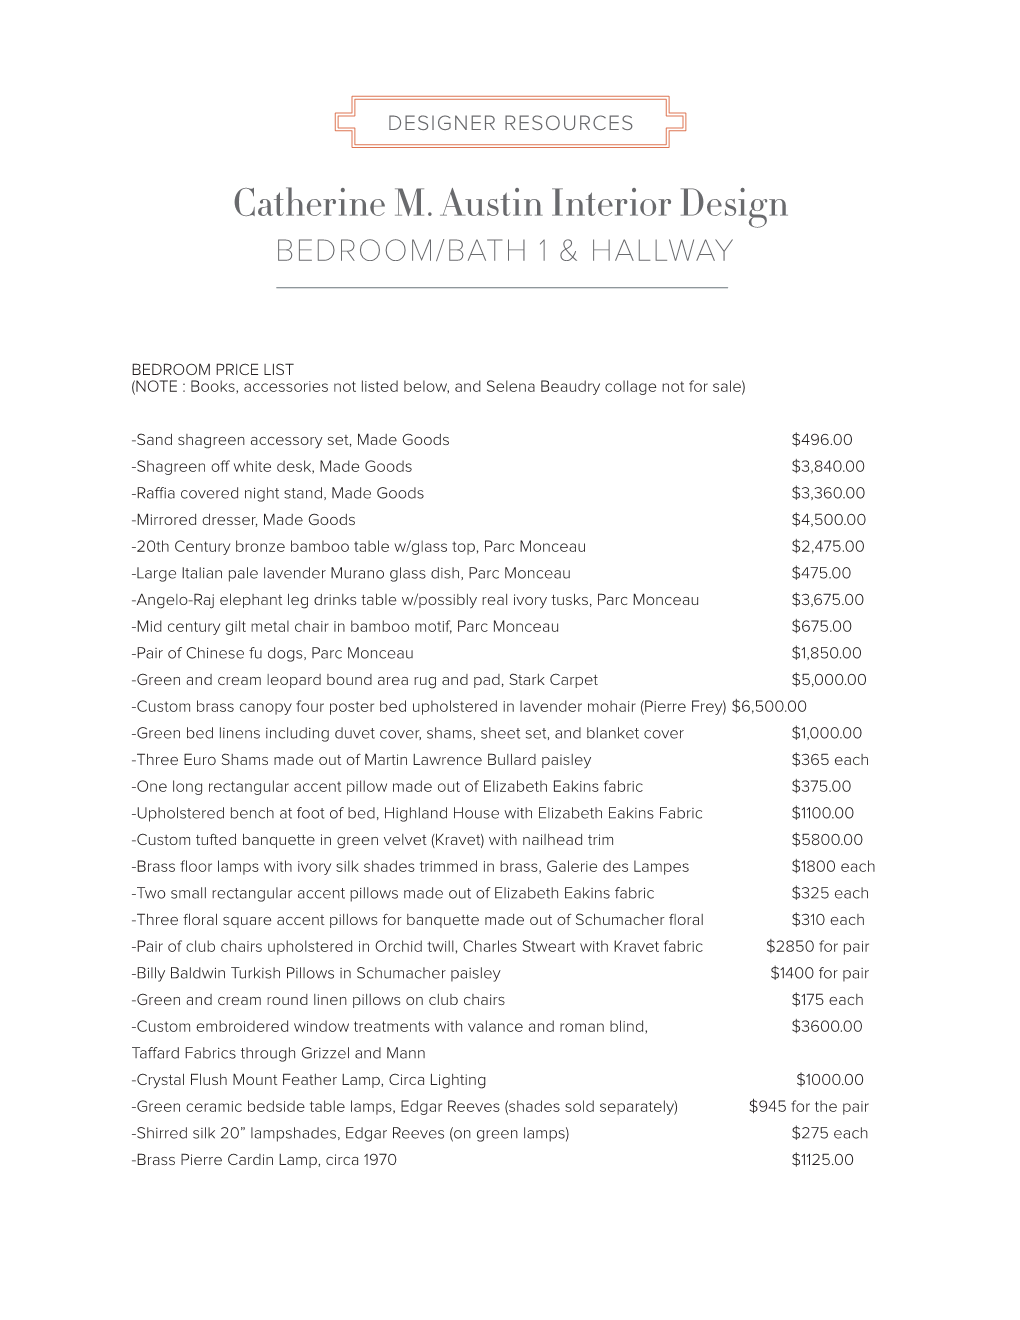 Catherine M. Austin Interior Design BEDROOM/BATH 1 & HALLWAY